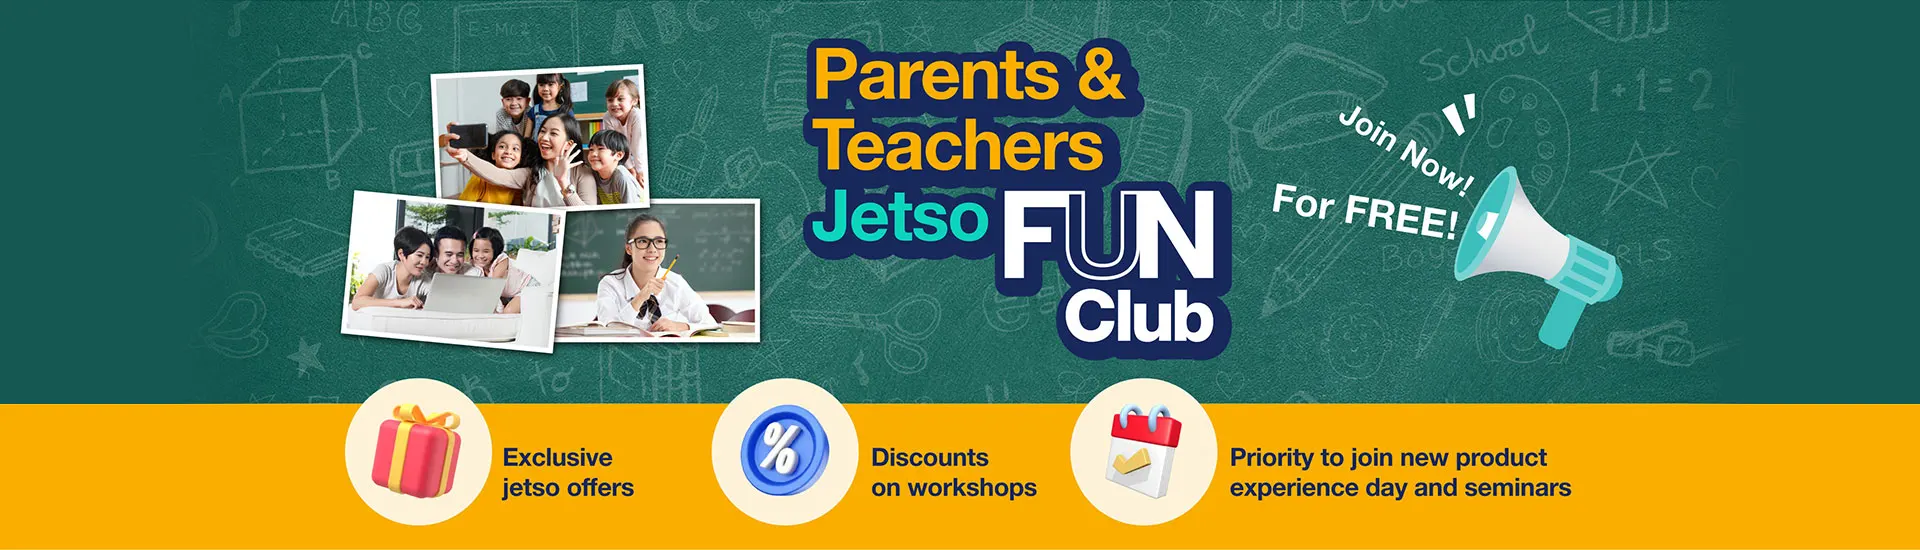 Parents & Teachers Jetso Fun Club